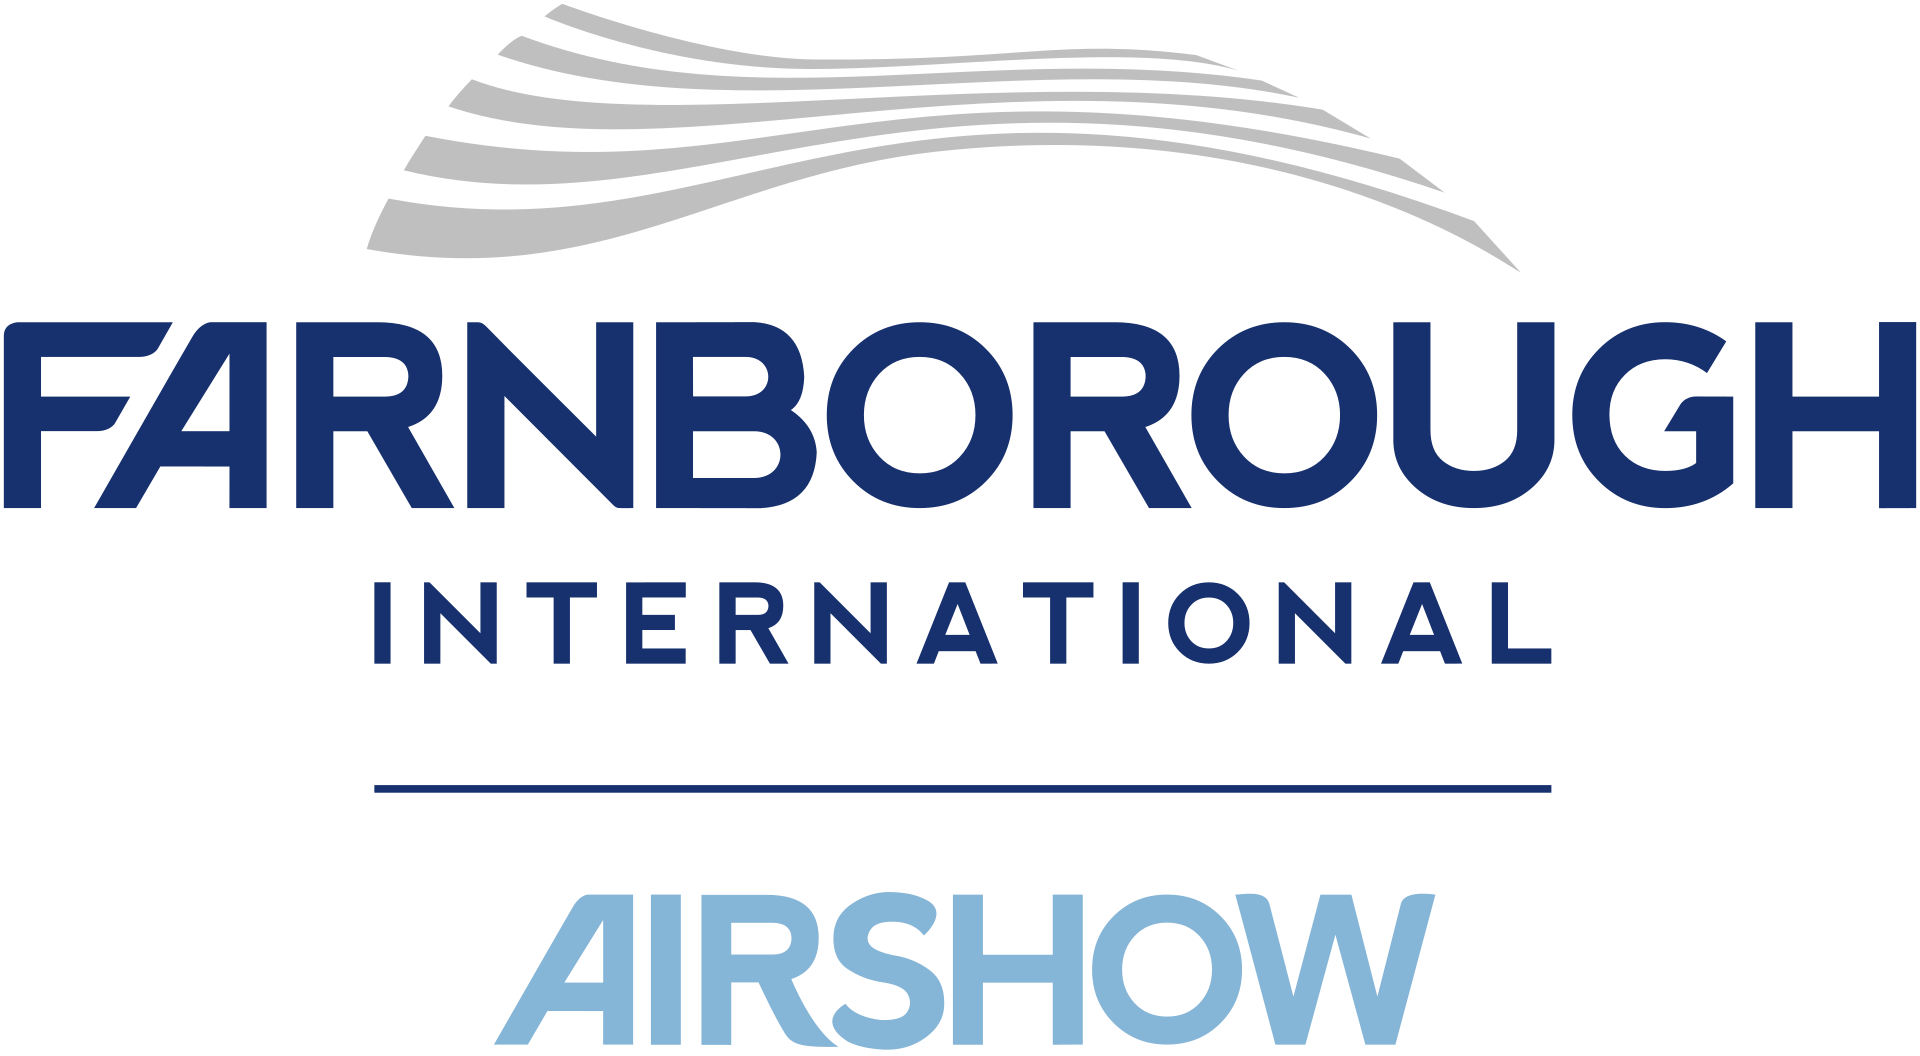 Farnborough International Airshow